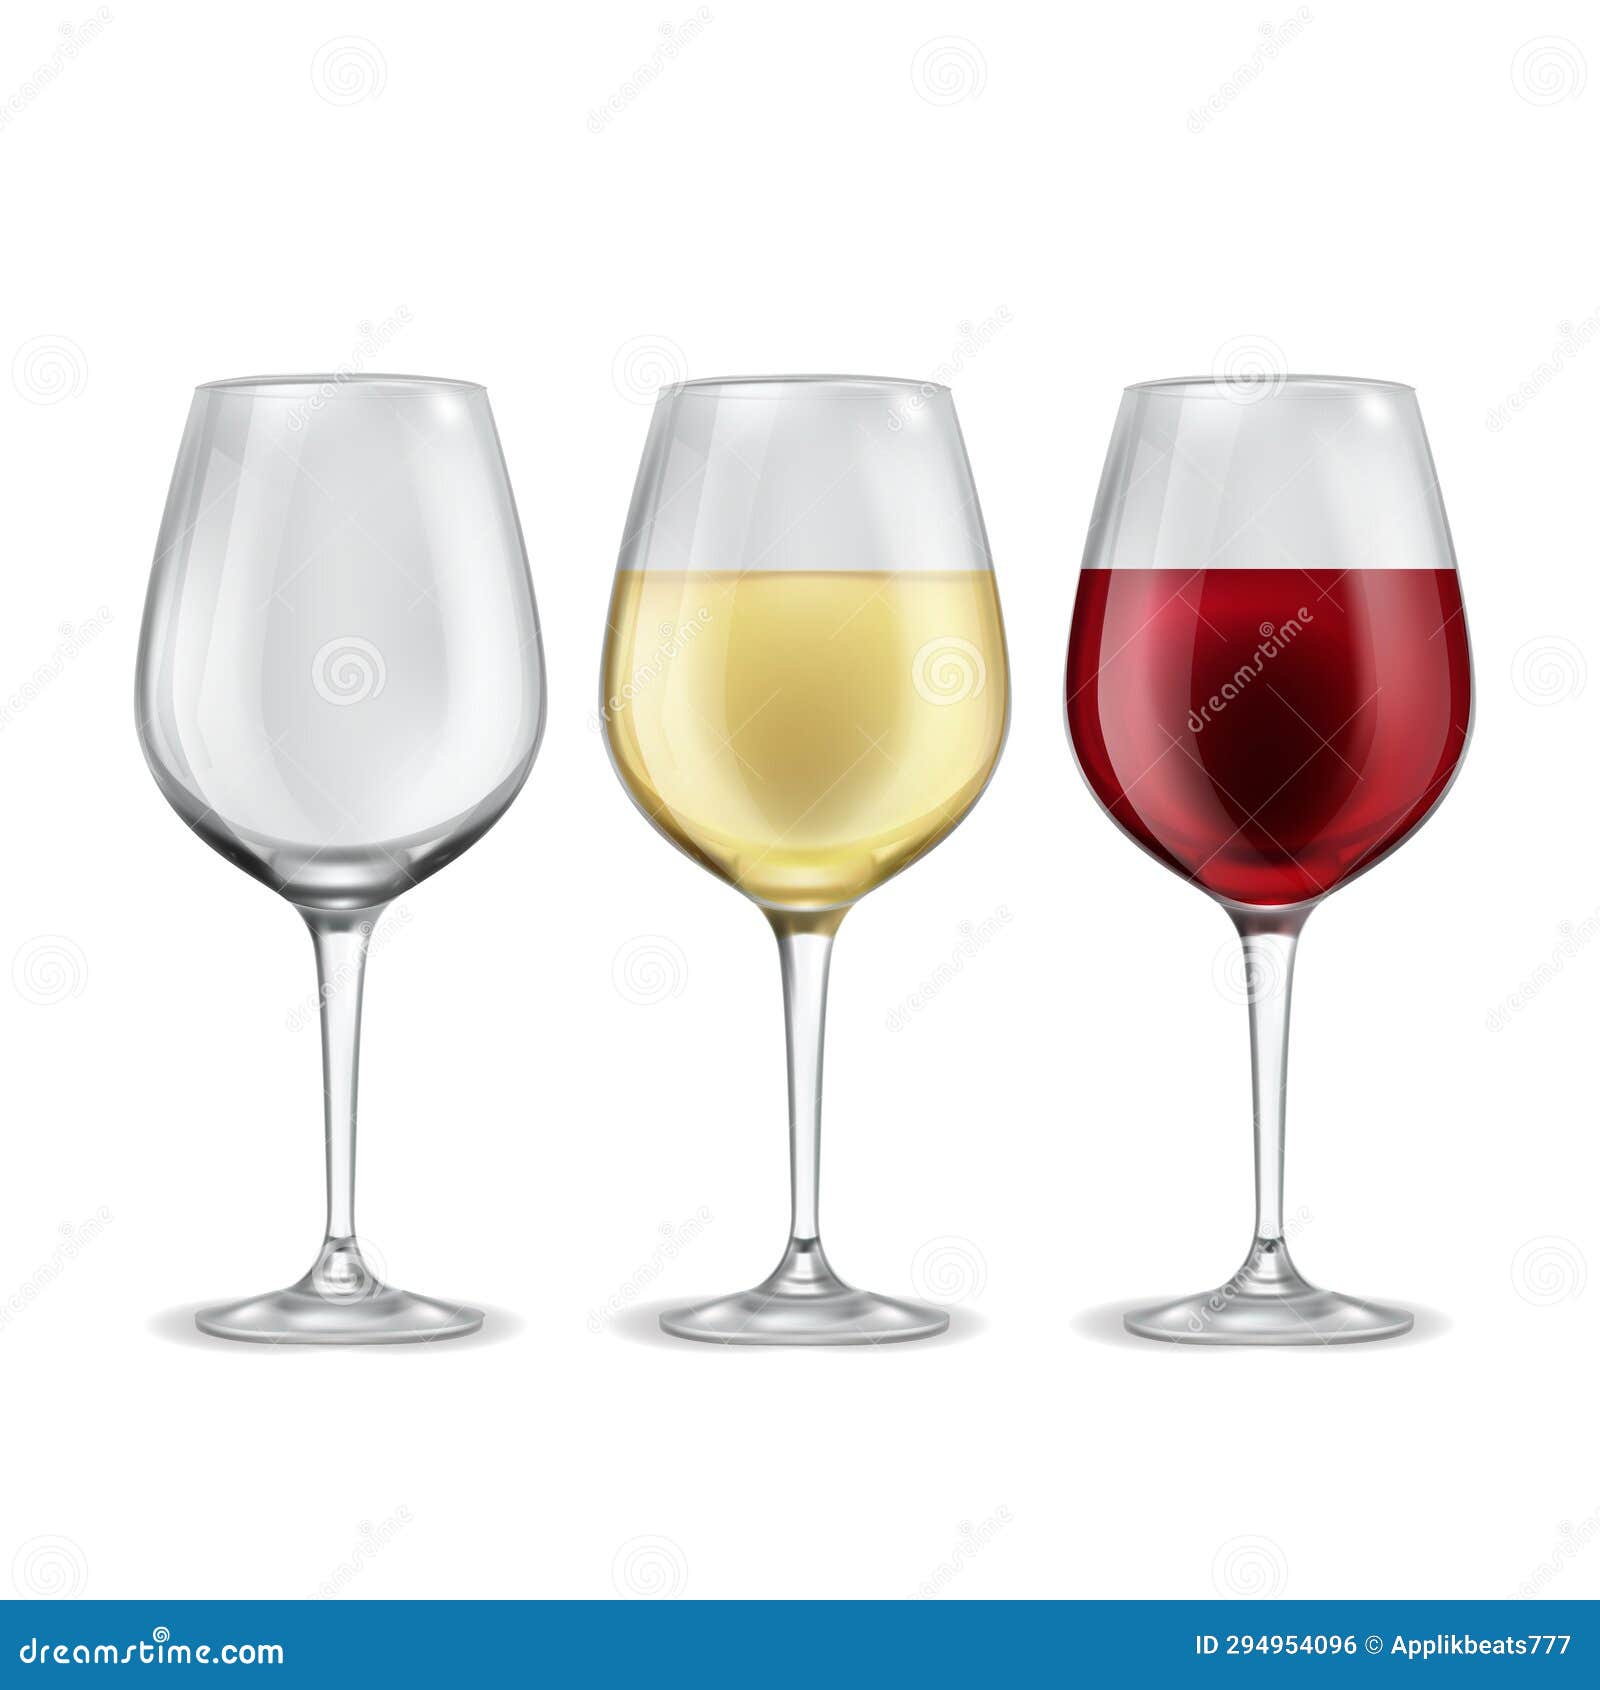 https://thumbs.dreamstime.com/z/wine-glass-empty-red-white-grape-beverage-glasses-half-filled-alcoholic-drink-elegant-transparent-wineglass-high-294954096.jpg